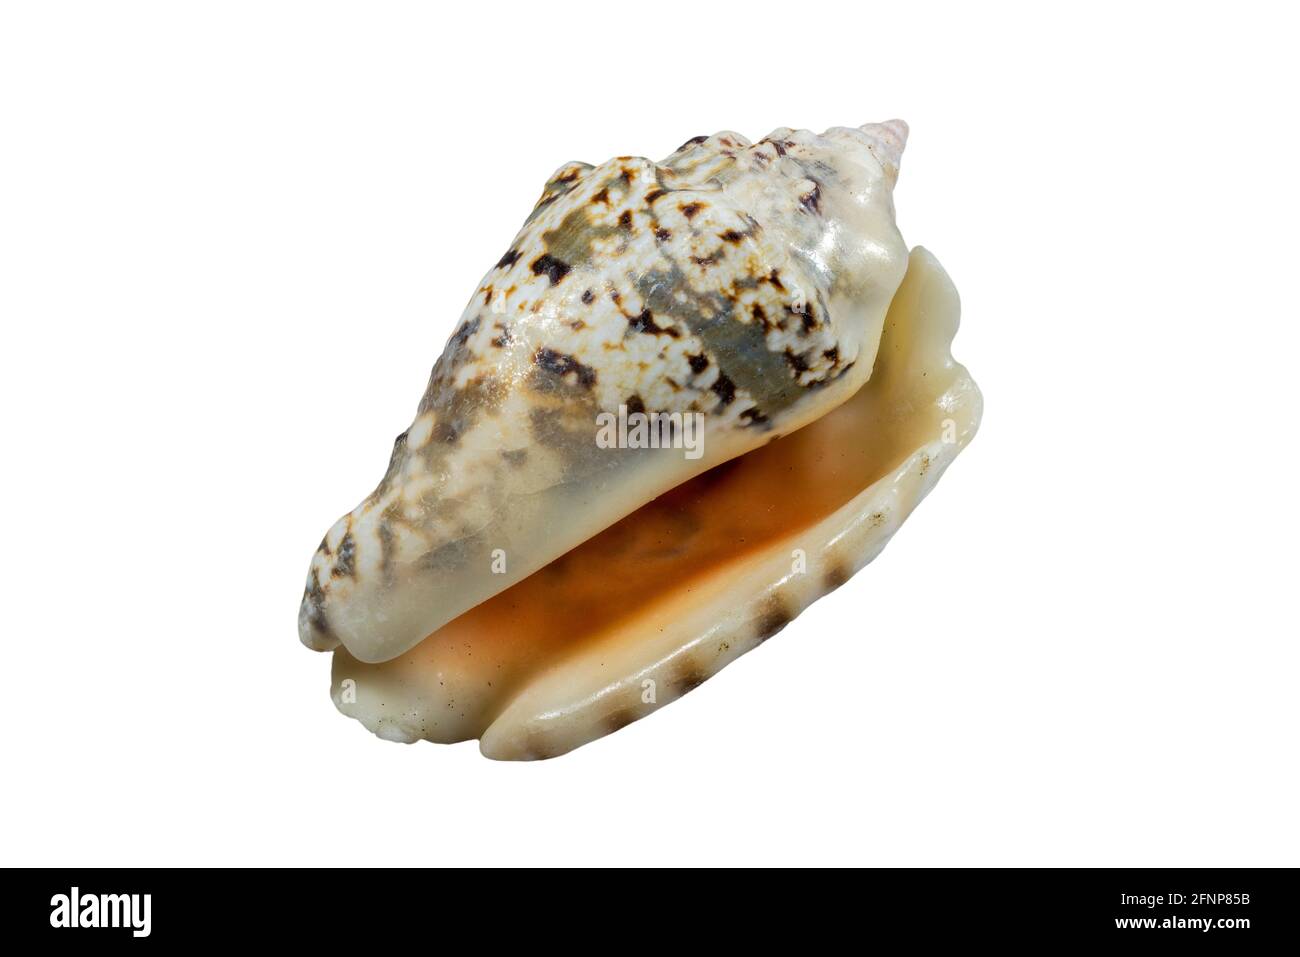 Silver conch (Lentigo lentiginosus / Strombus lentiginosus), sea snail, marine gastropod mollusk native to the Indo-Pacific against white background Stock Photo